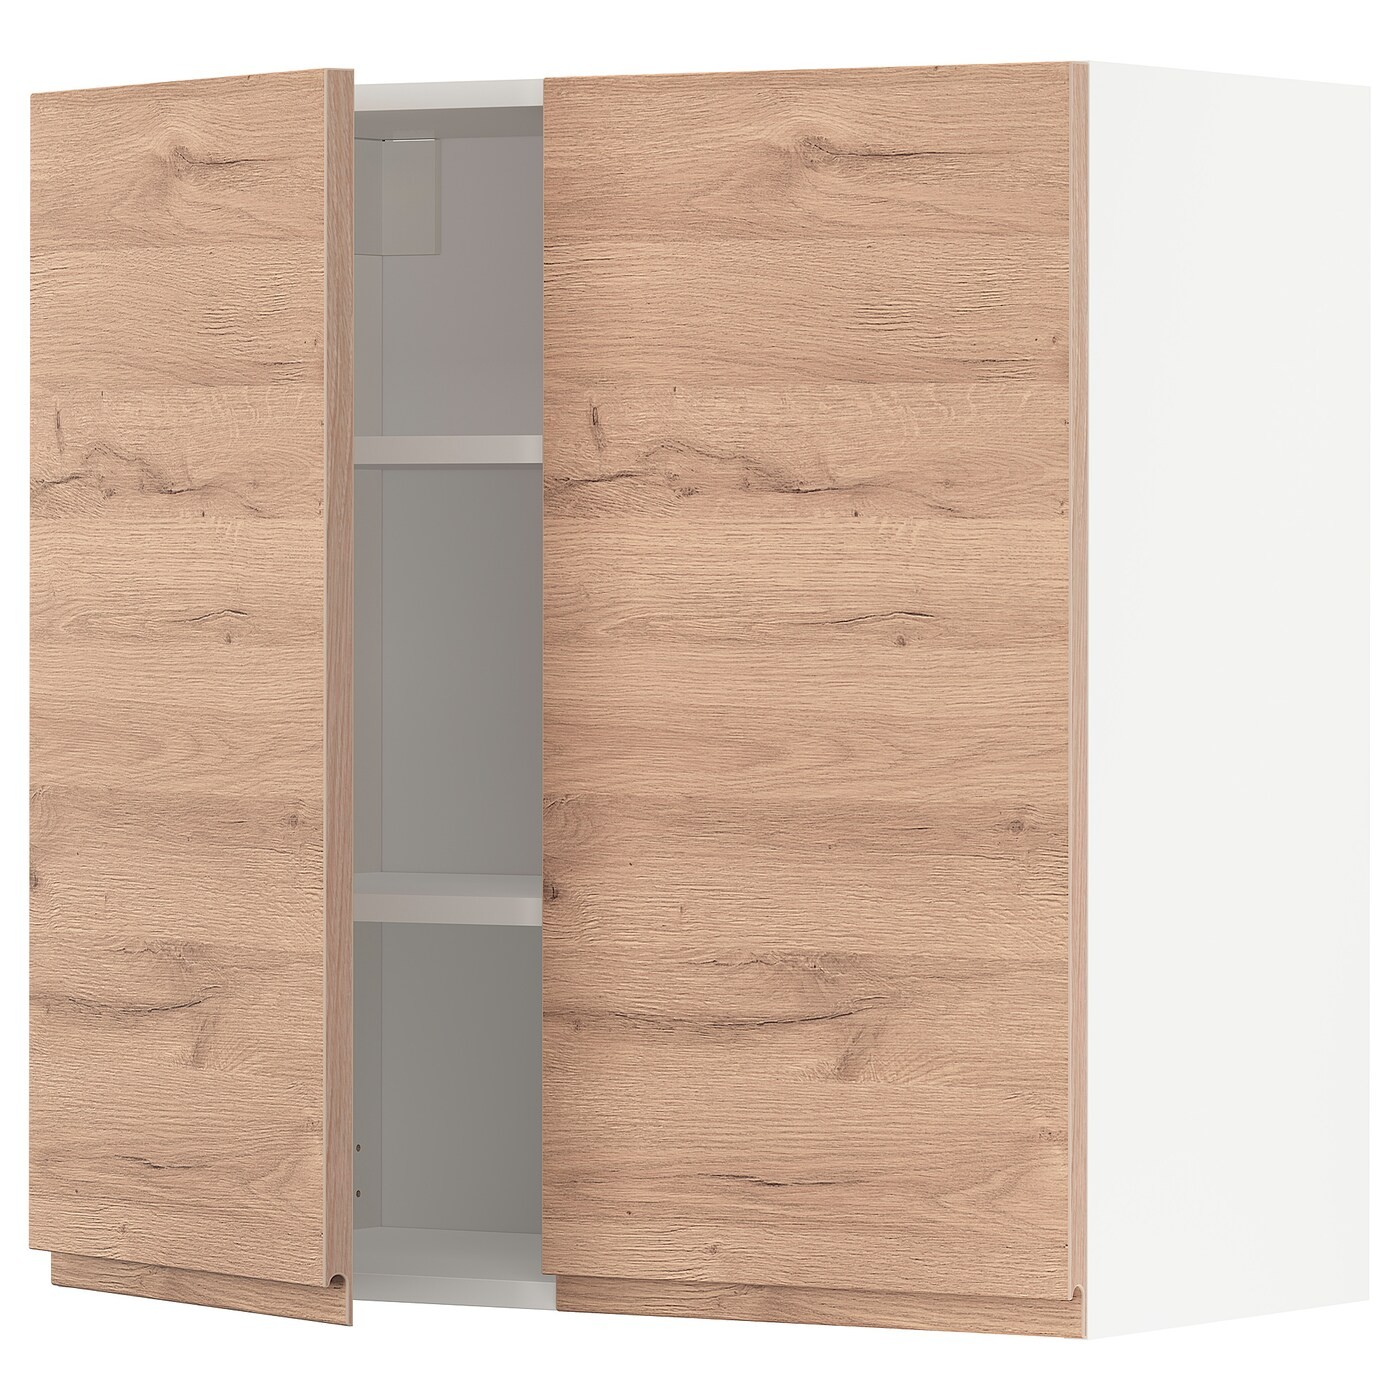 IKEA METOD МЕТОД Навесной шкаф с полками / 2 дверцы, белый / Voxtorp имитация дуб, 80x80 см 69458299 | 694.582.99